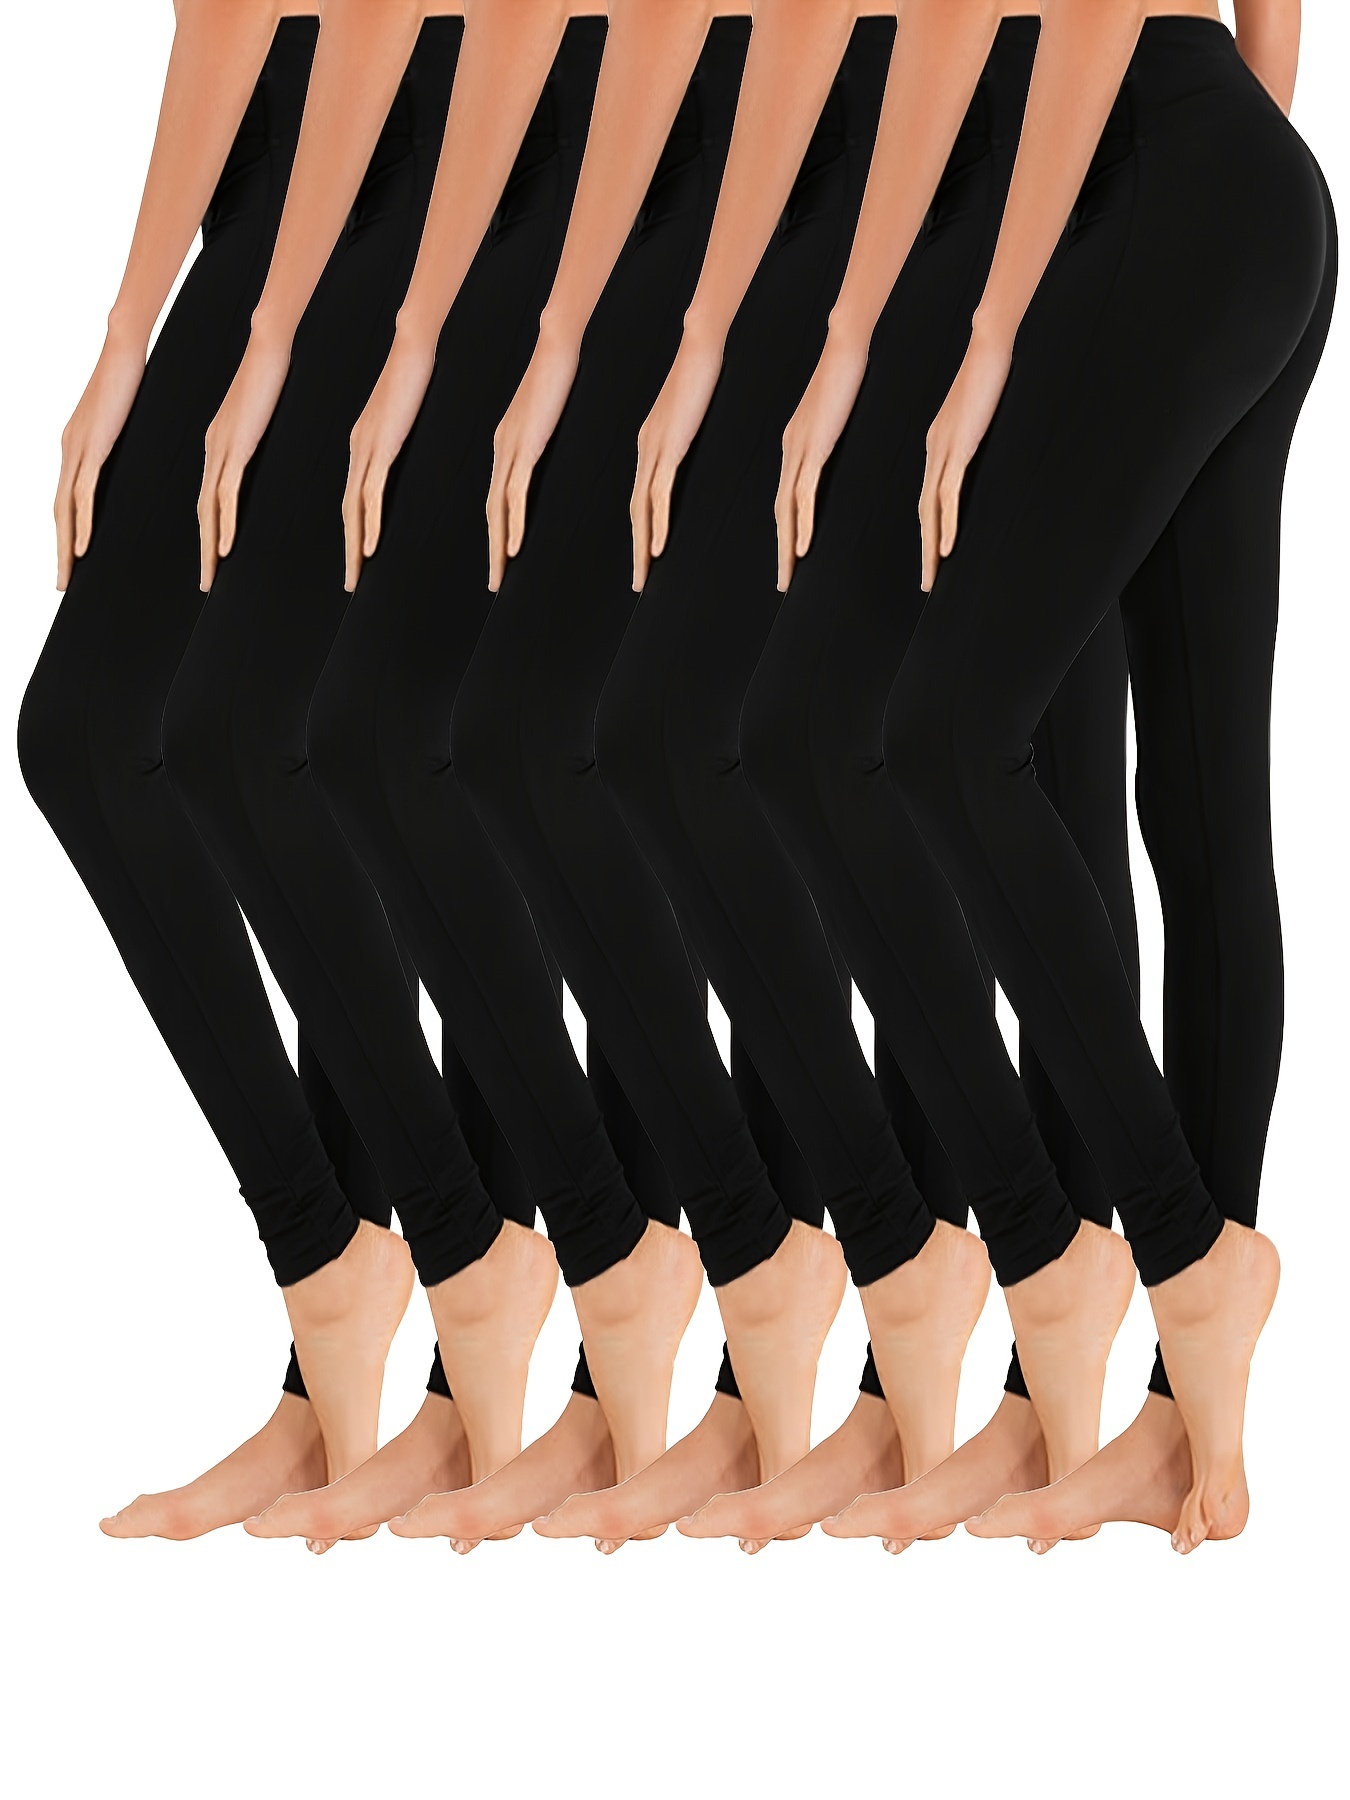 Syrinx High Waisted Leggings for Women - Buttery Soft Tummy